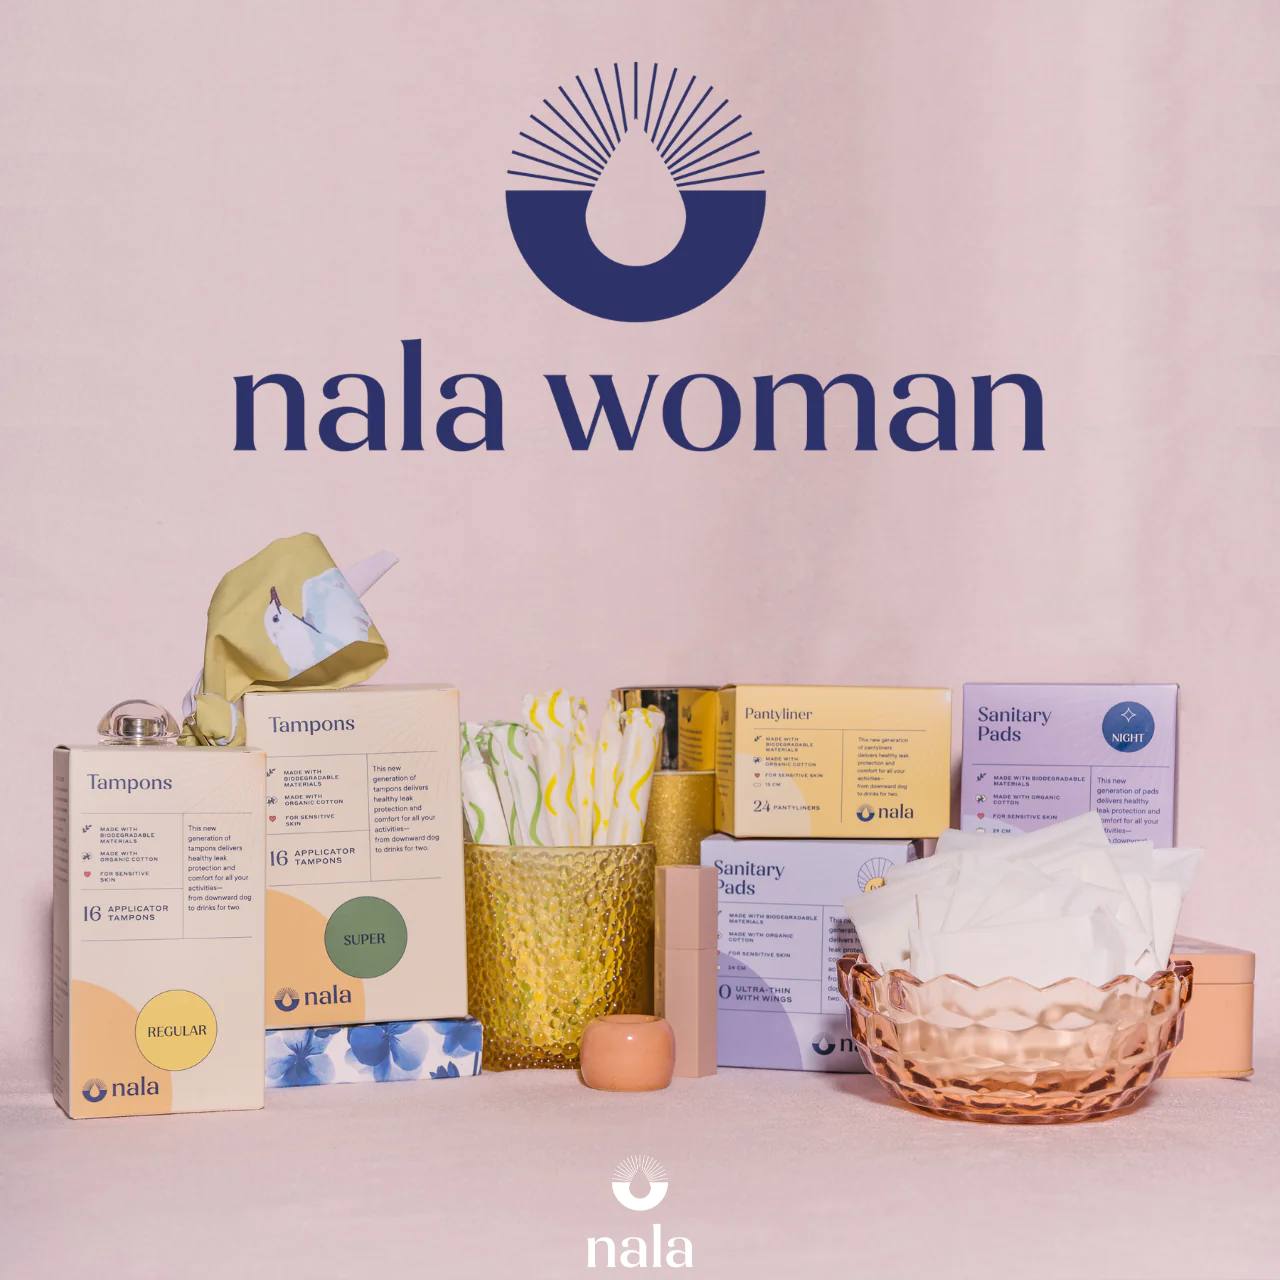 nala woman period brands period care brand